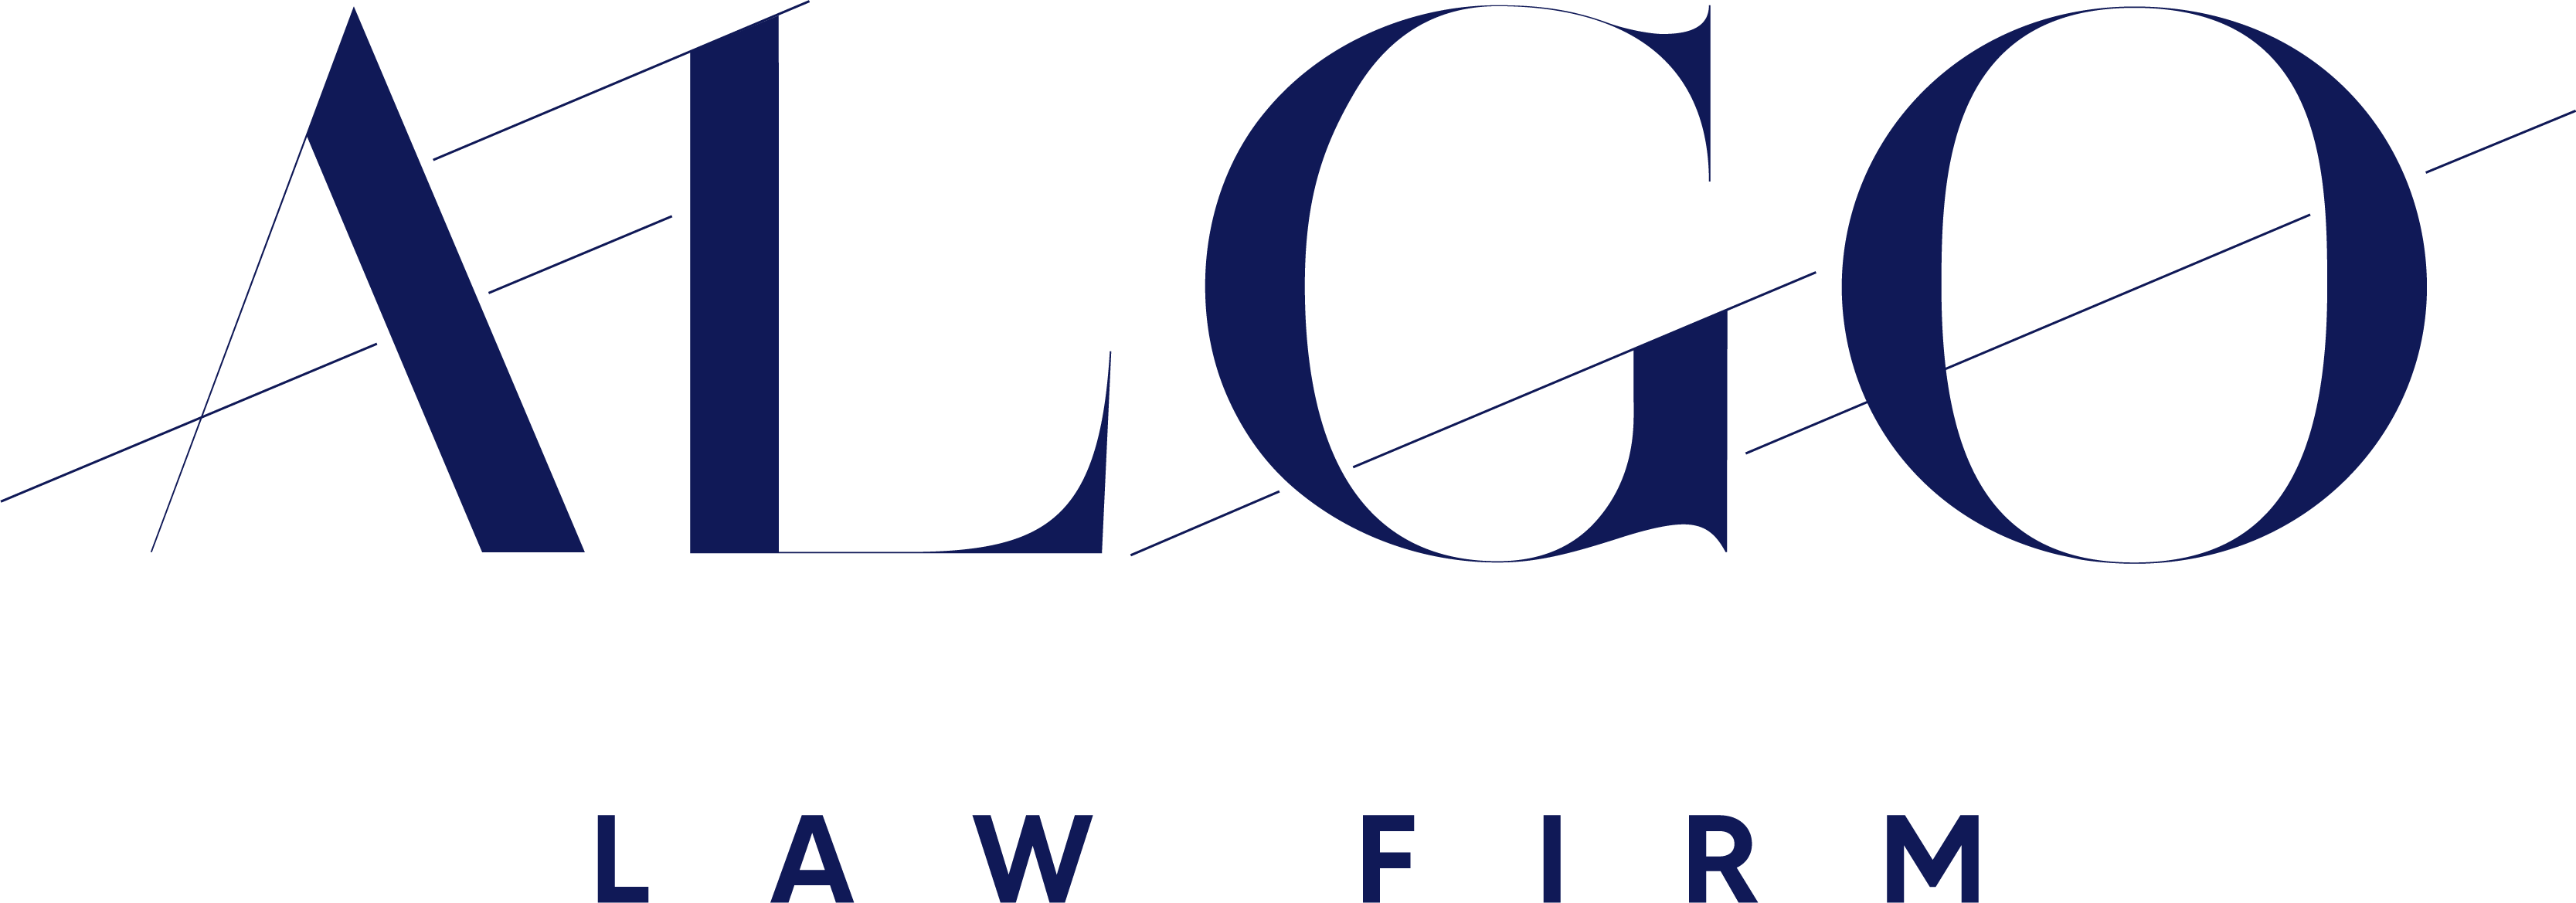 ALGO law firm